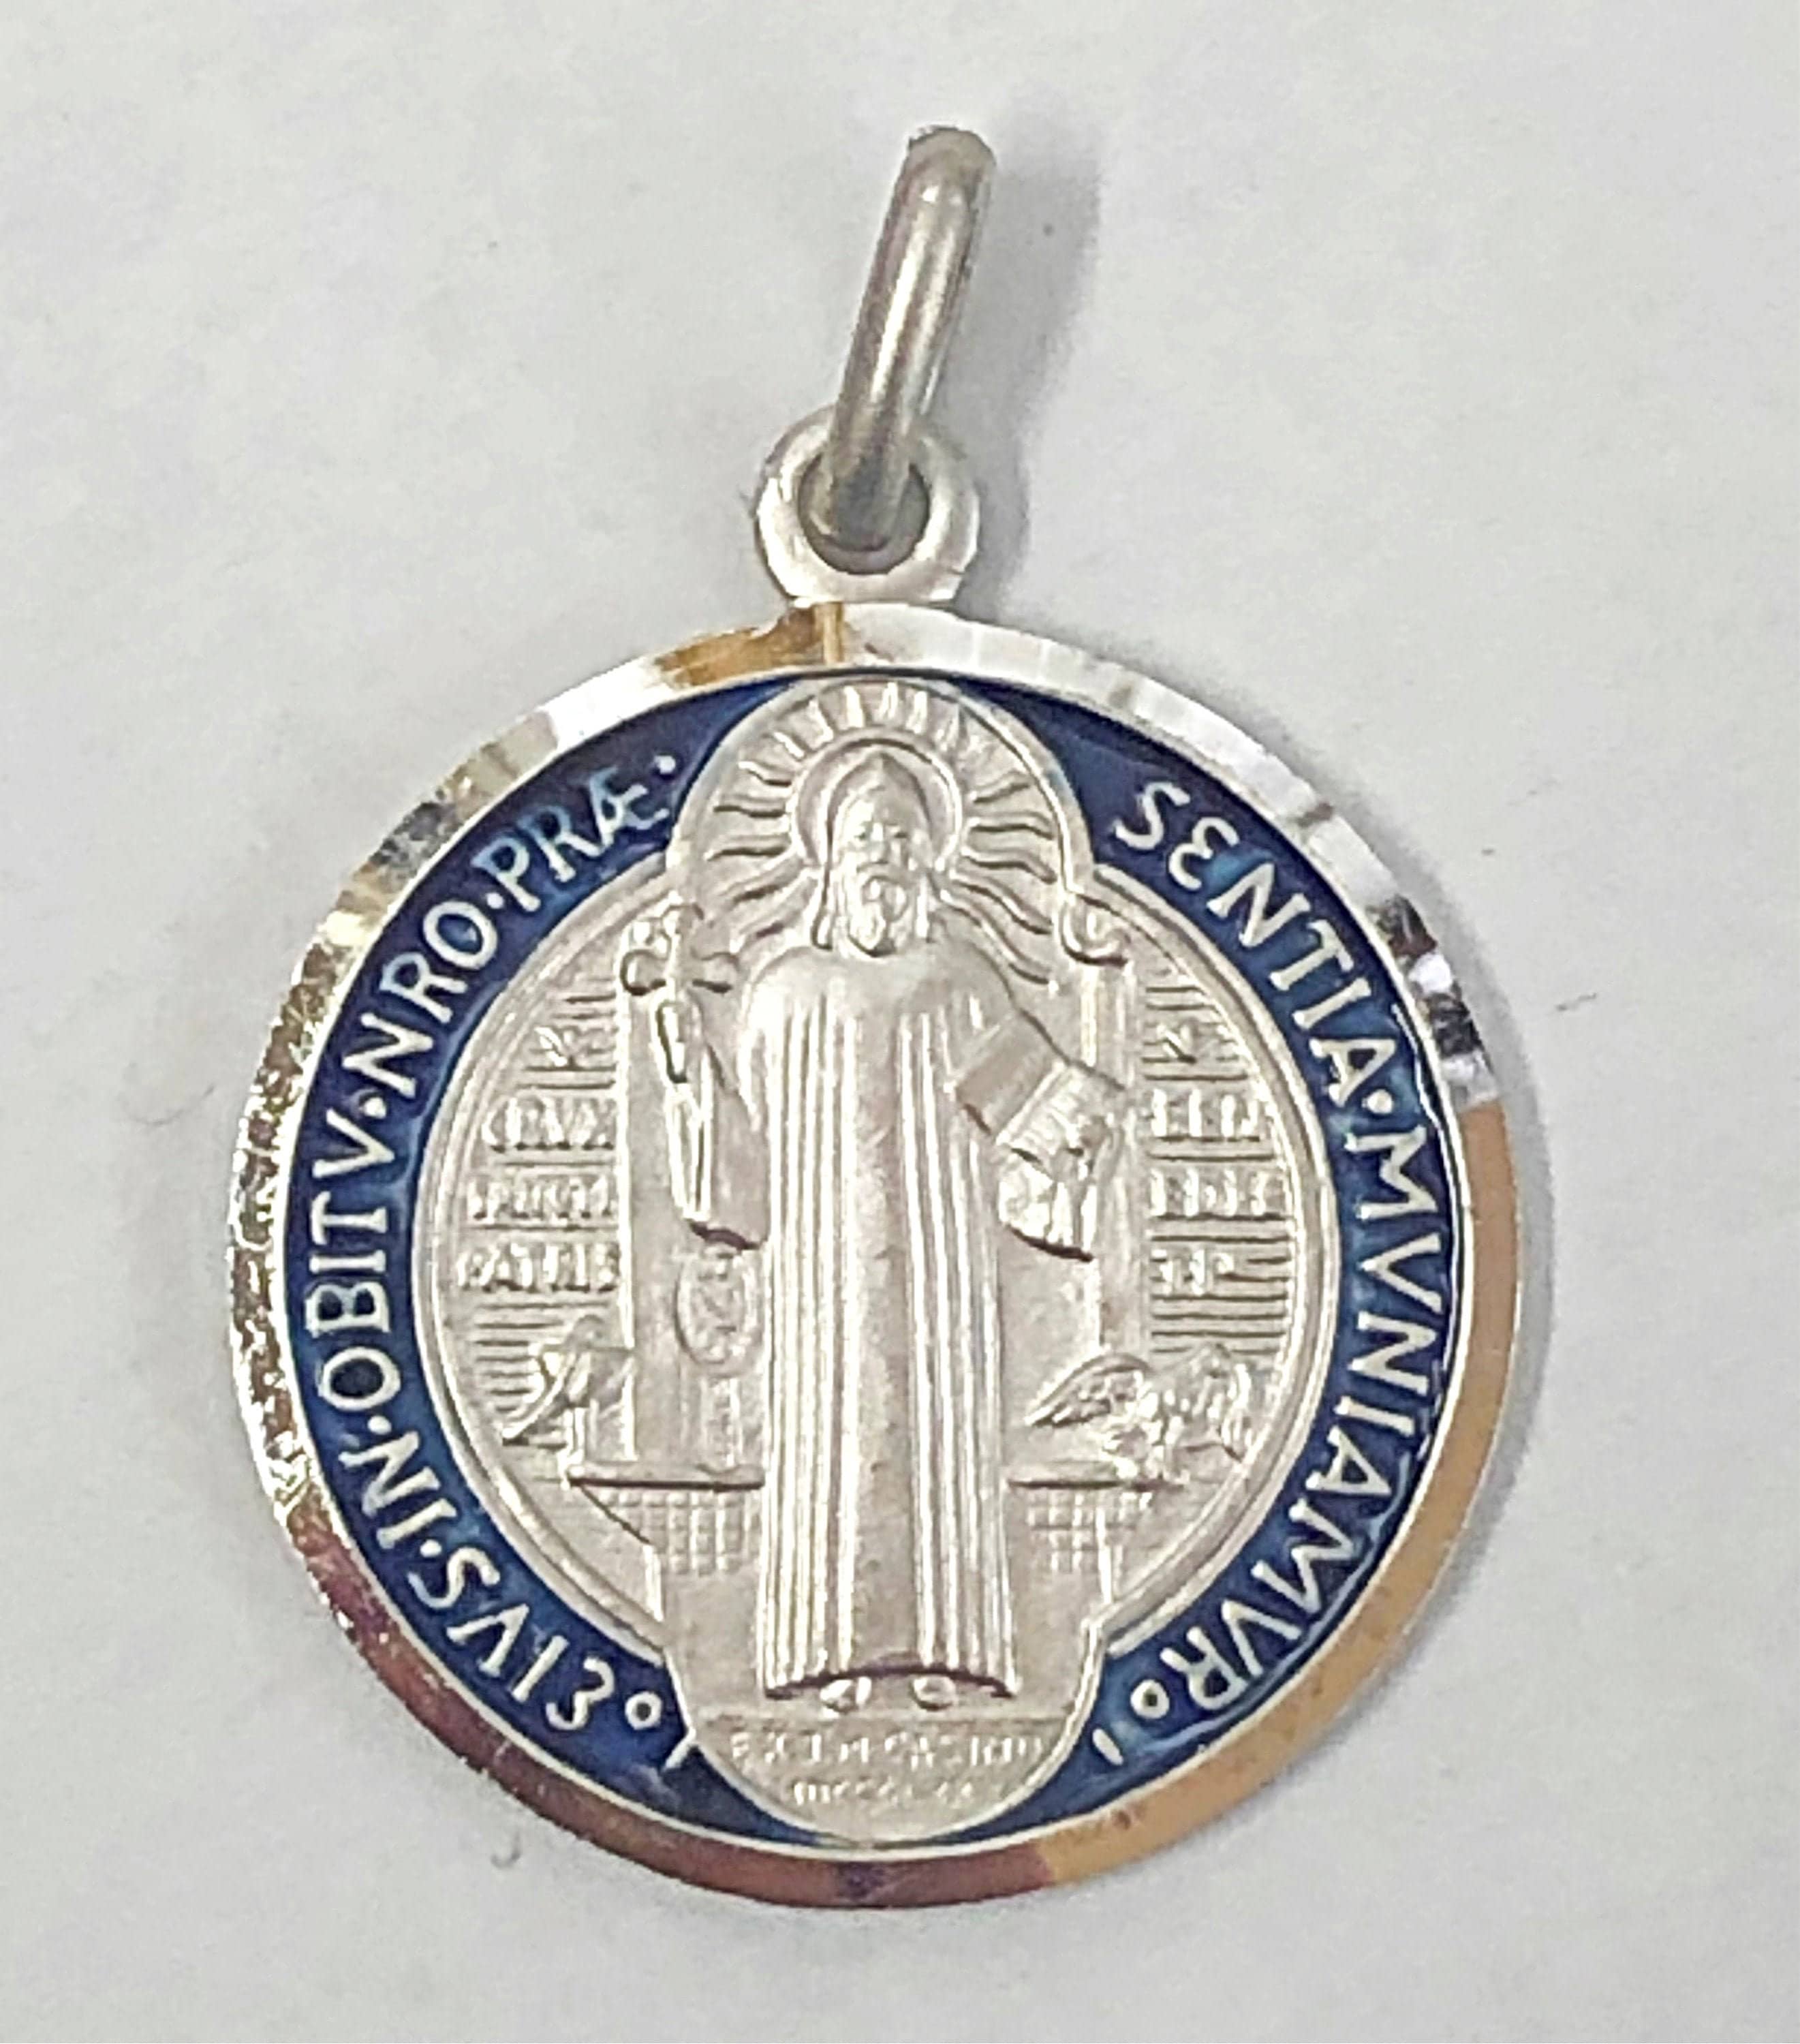 Medalla San Benito, plata primera ley 925, contorno liso